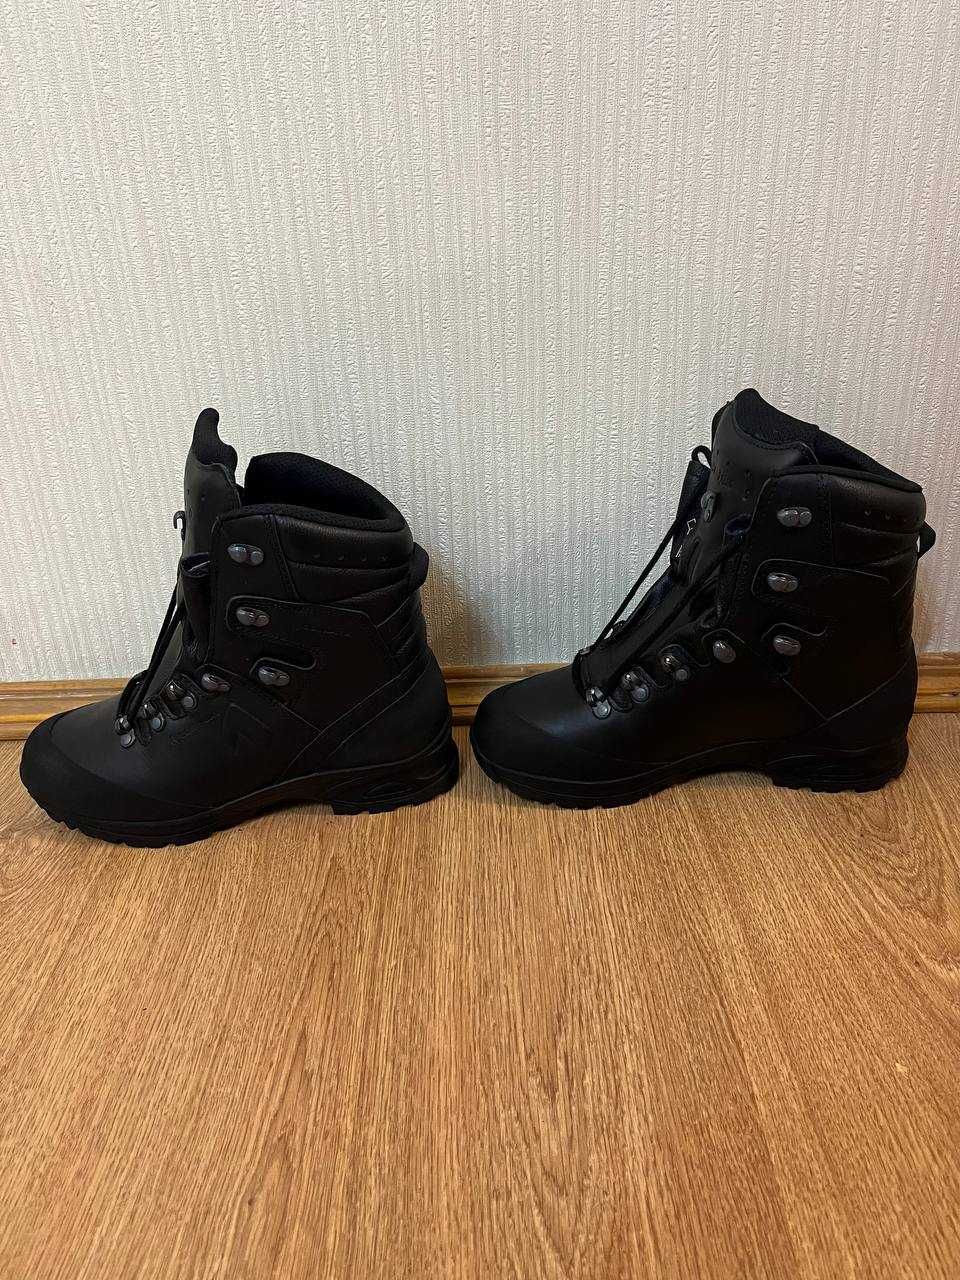 Трекінгові черевики haix commander gtx waterproof black (41)